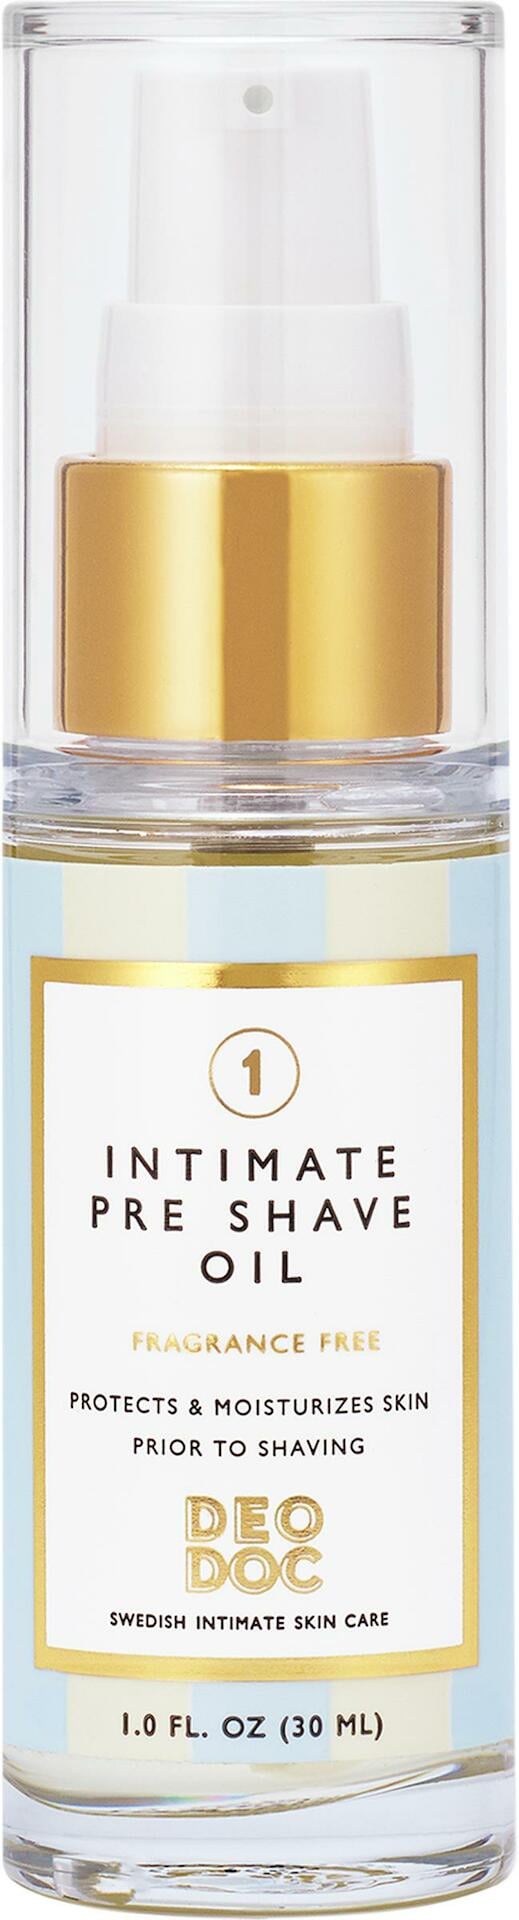 DeoDoc Pre-shave Intimate Oil Fragrance Free 30 ml